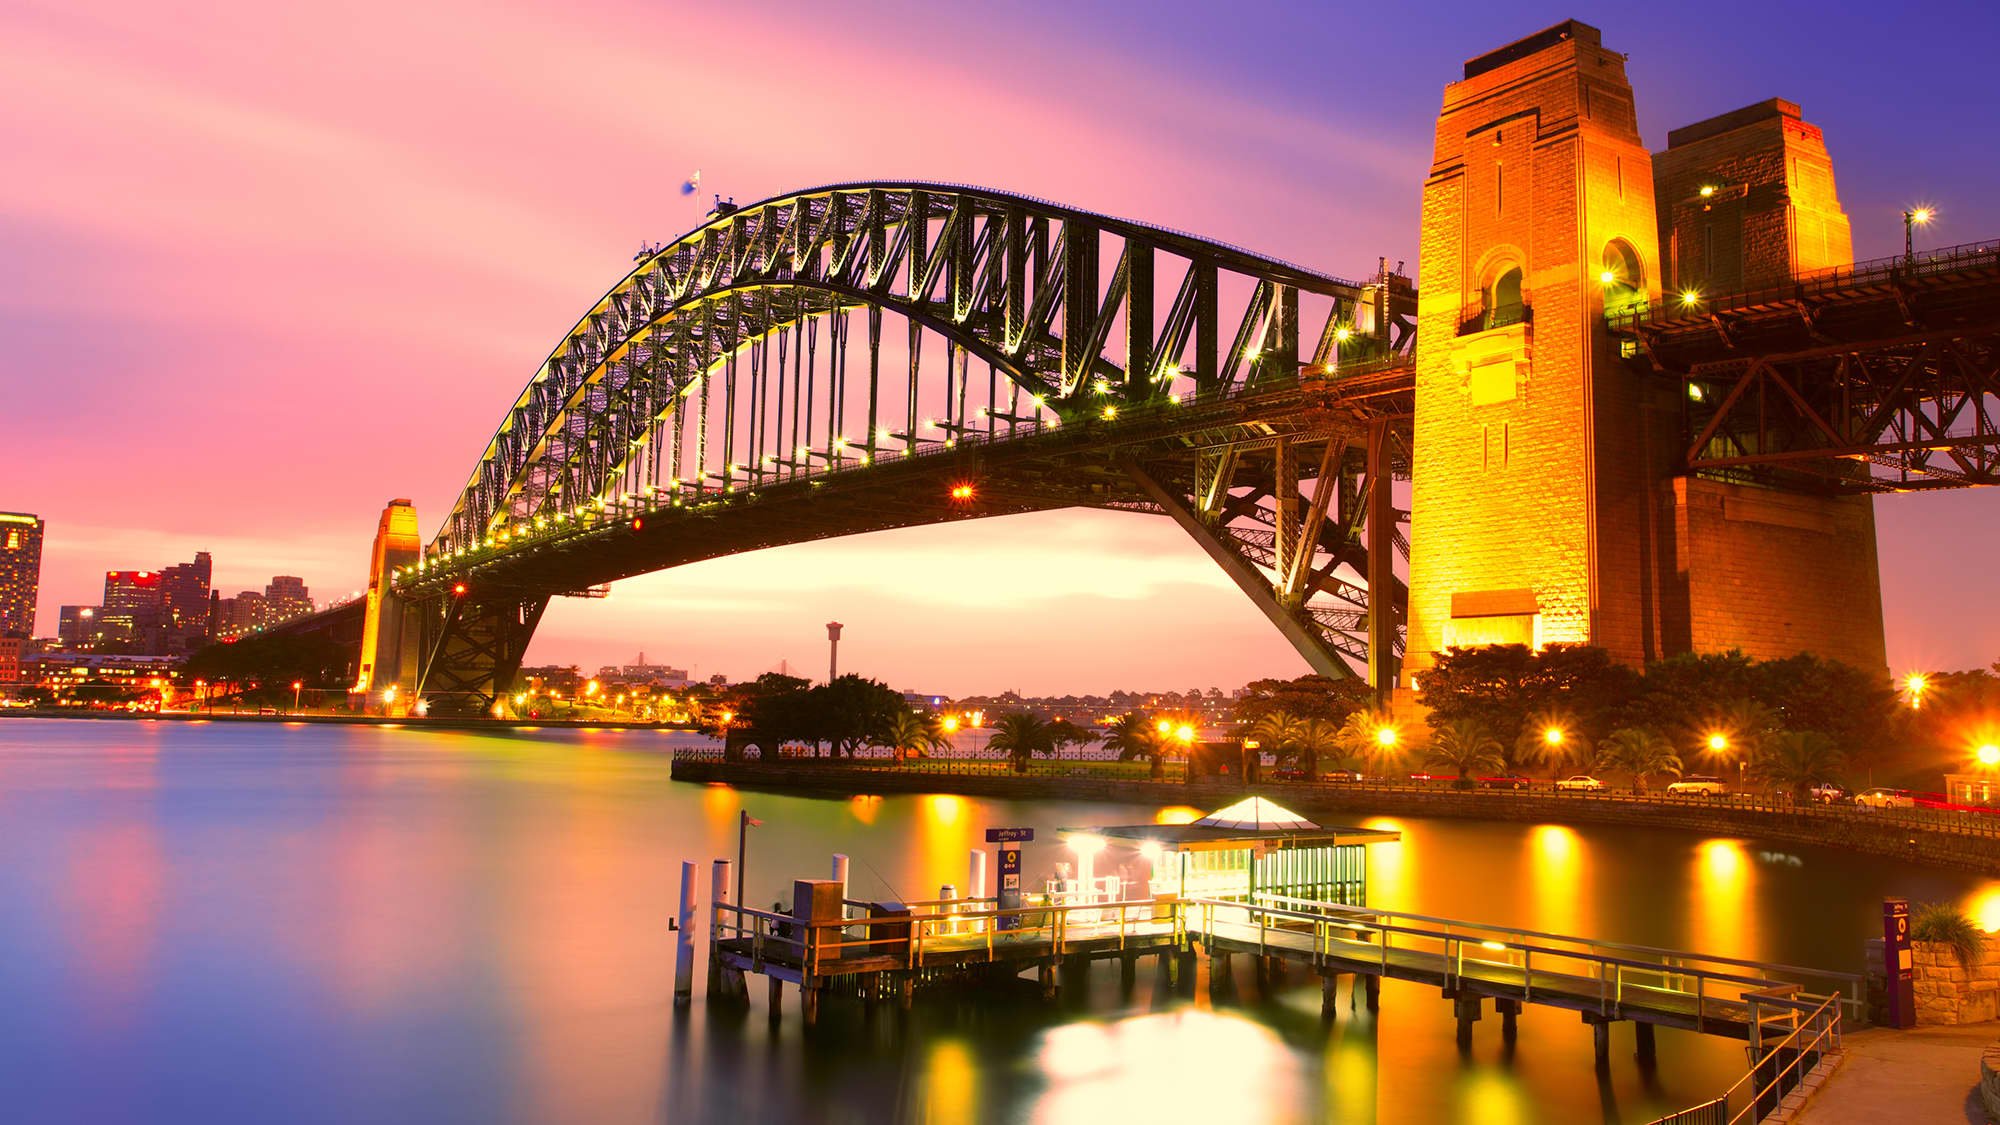 Most australians. Харбор-бридж Сидней. Австралия.Сидней.мост Харбор-бридж. Сиднейский мост Харбор-бридж. Мост Харбор бридж в Австралии.